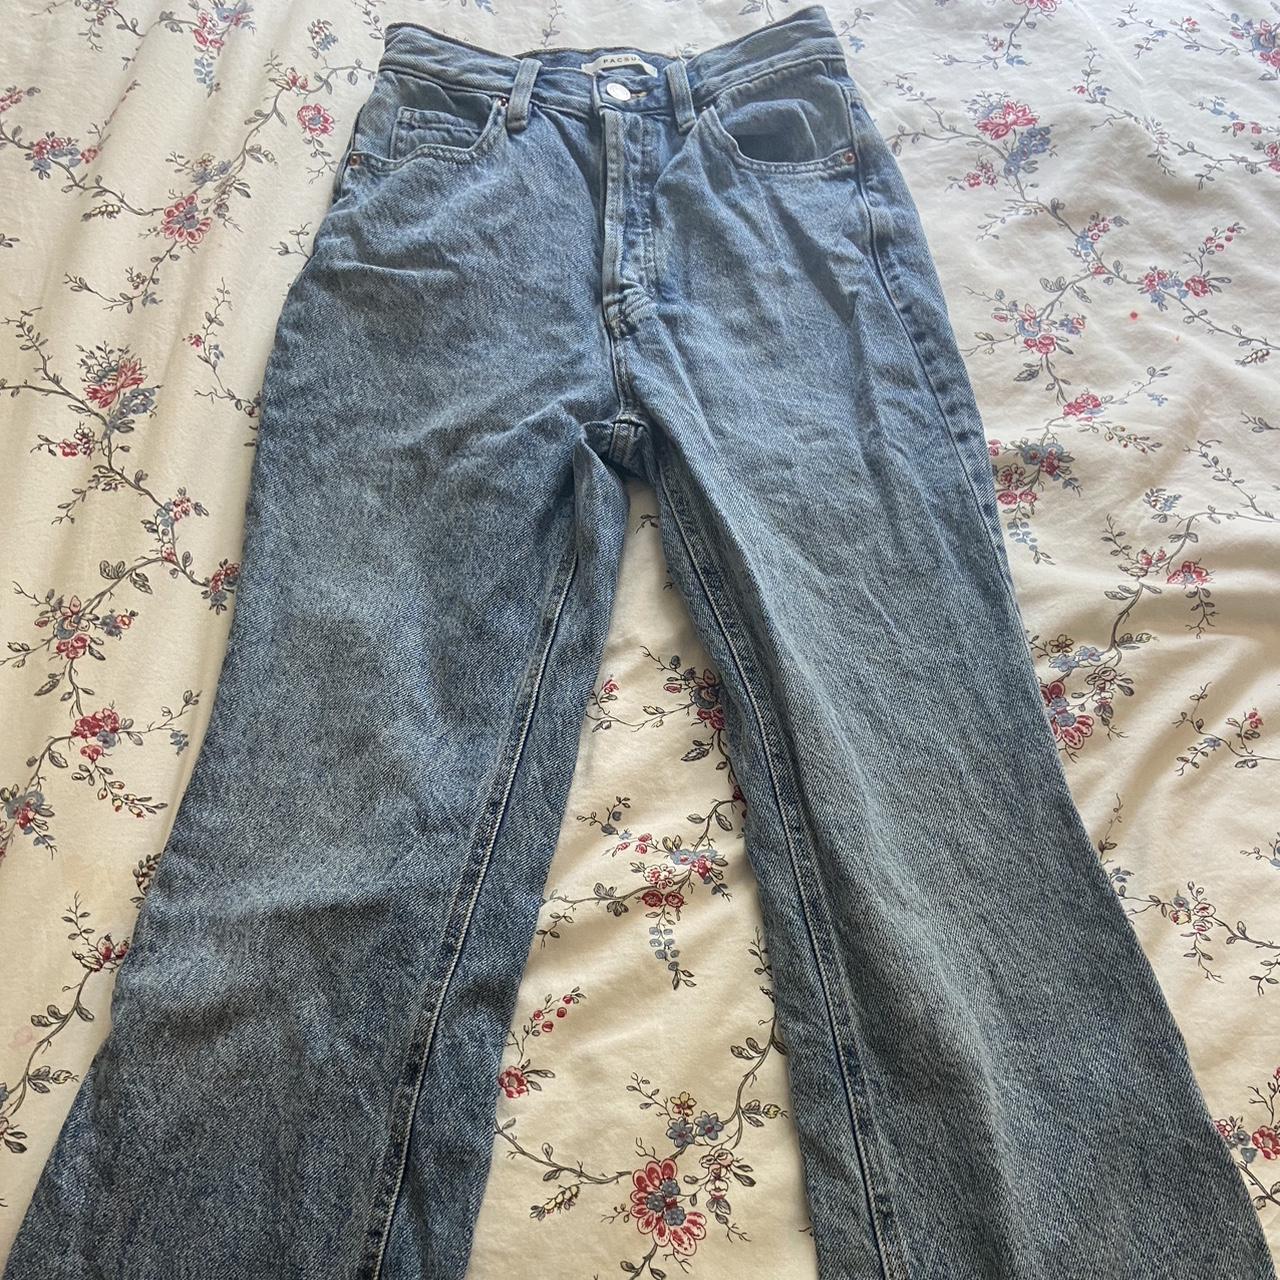 pacsun bootcut jeans. worn twice. size 26 - Depop